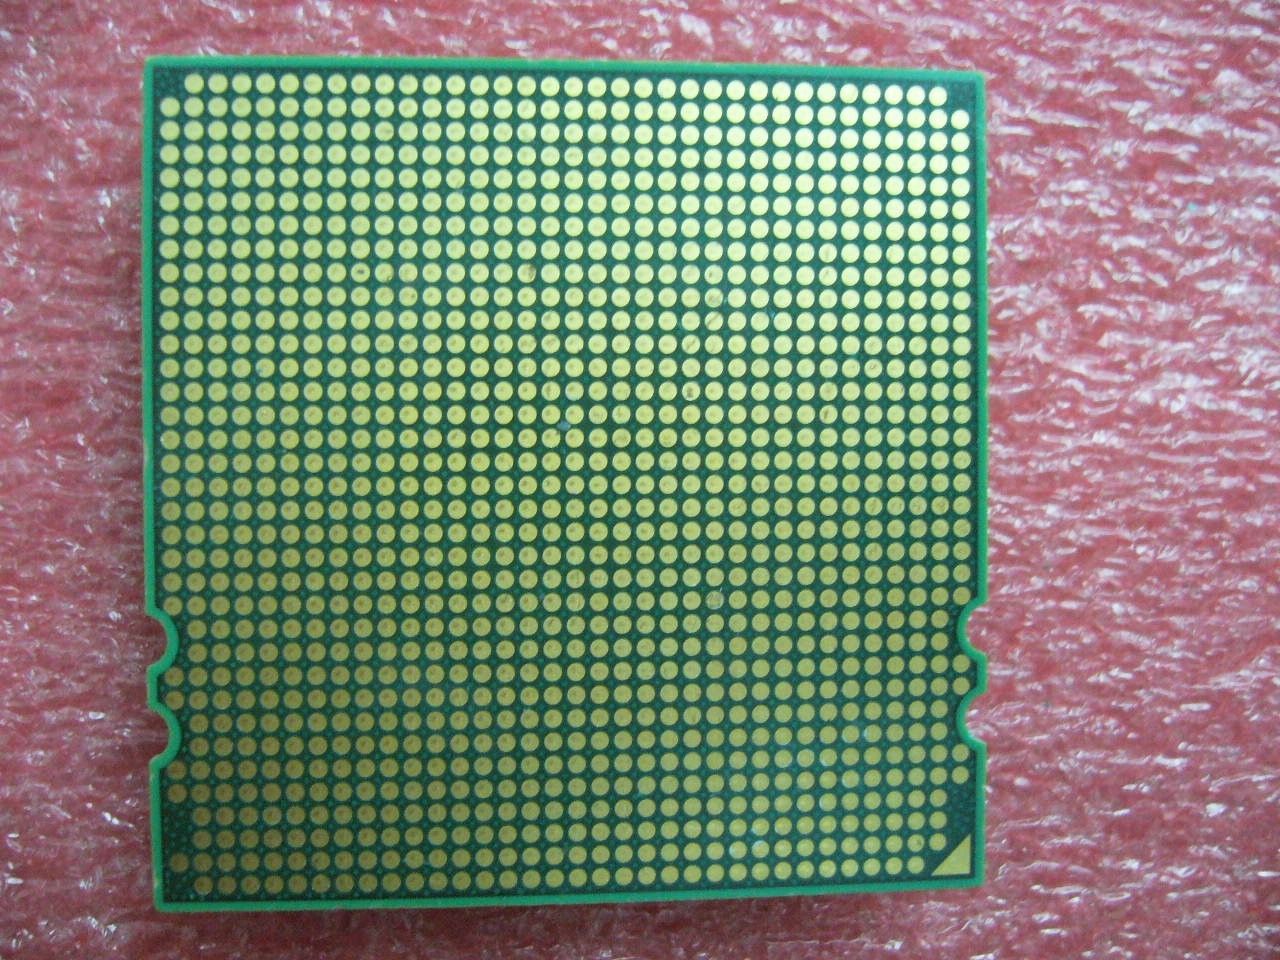 QTY 1x AMD Opteron 2374 HE 2.2 GHz Quad-Core OS2374PAL4DGI CPU Socket F 1207 - Click Image to Close